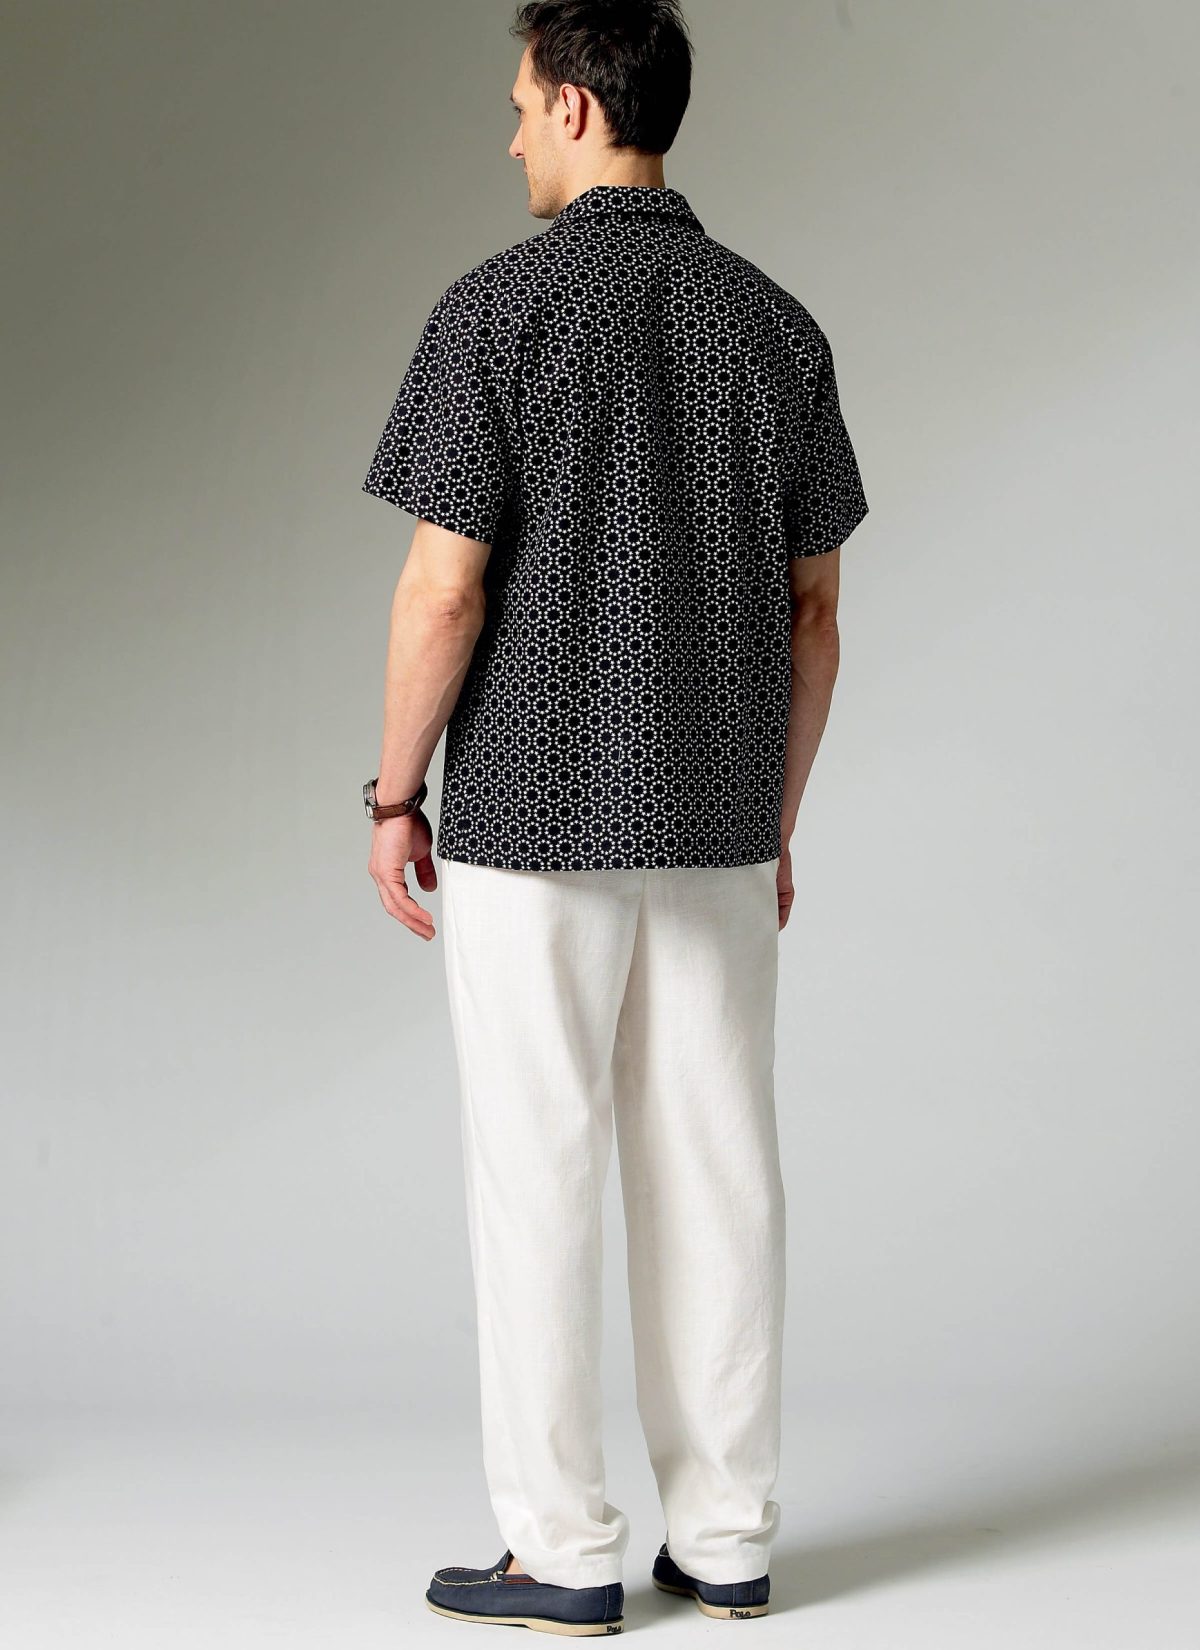 McCall's Sewing Pattern M6972 Men's/Boys' Shirt, Shorts and Pants